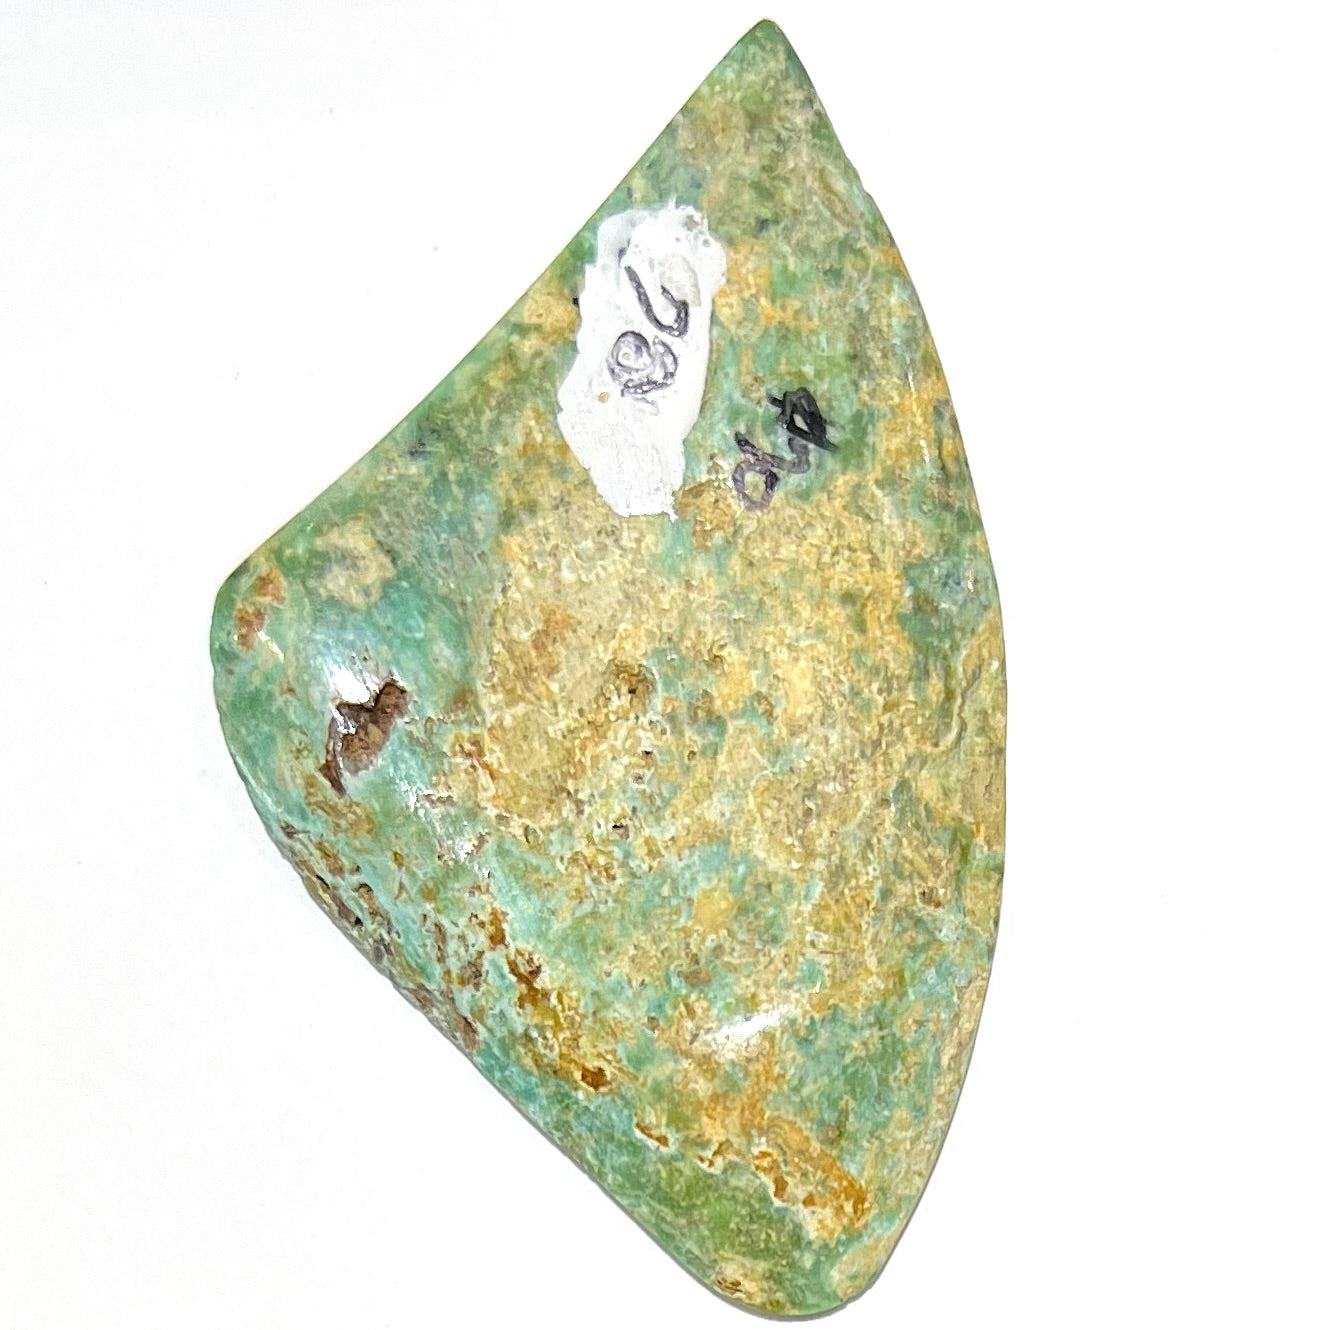 A triangular cut polished green turquoise stone from Morenci, Arizona.